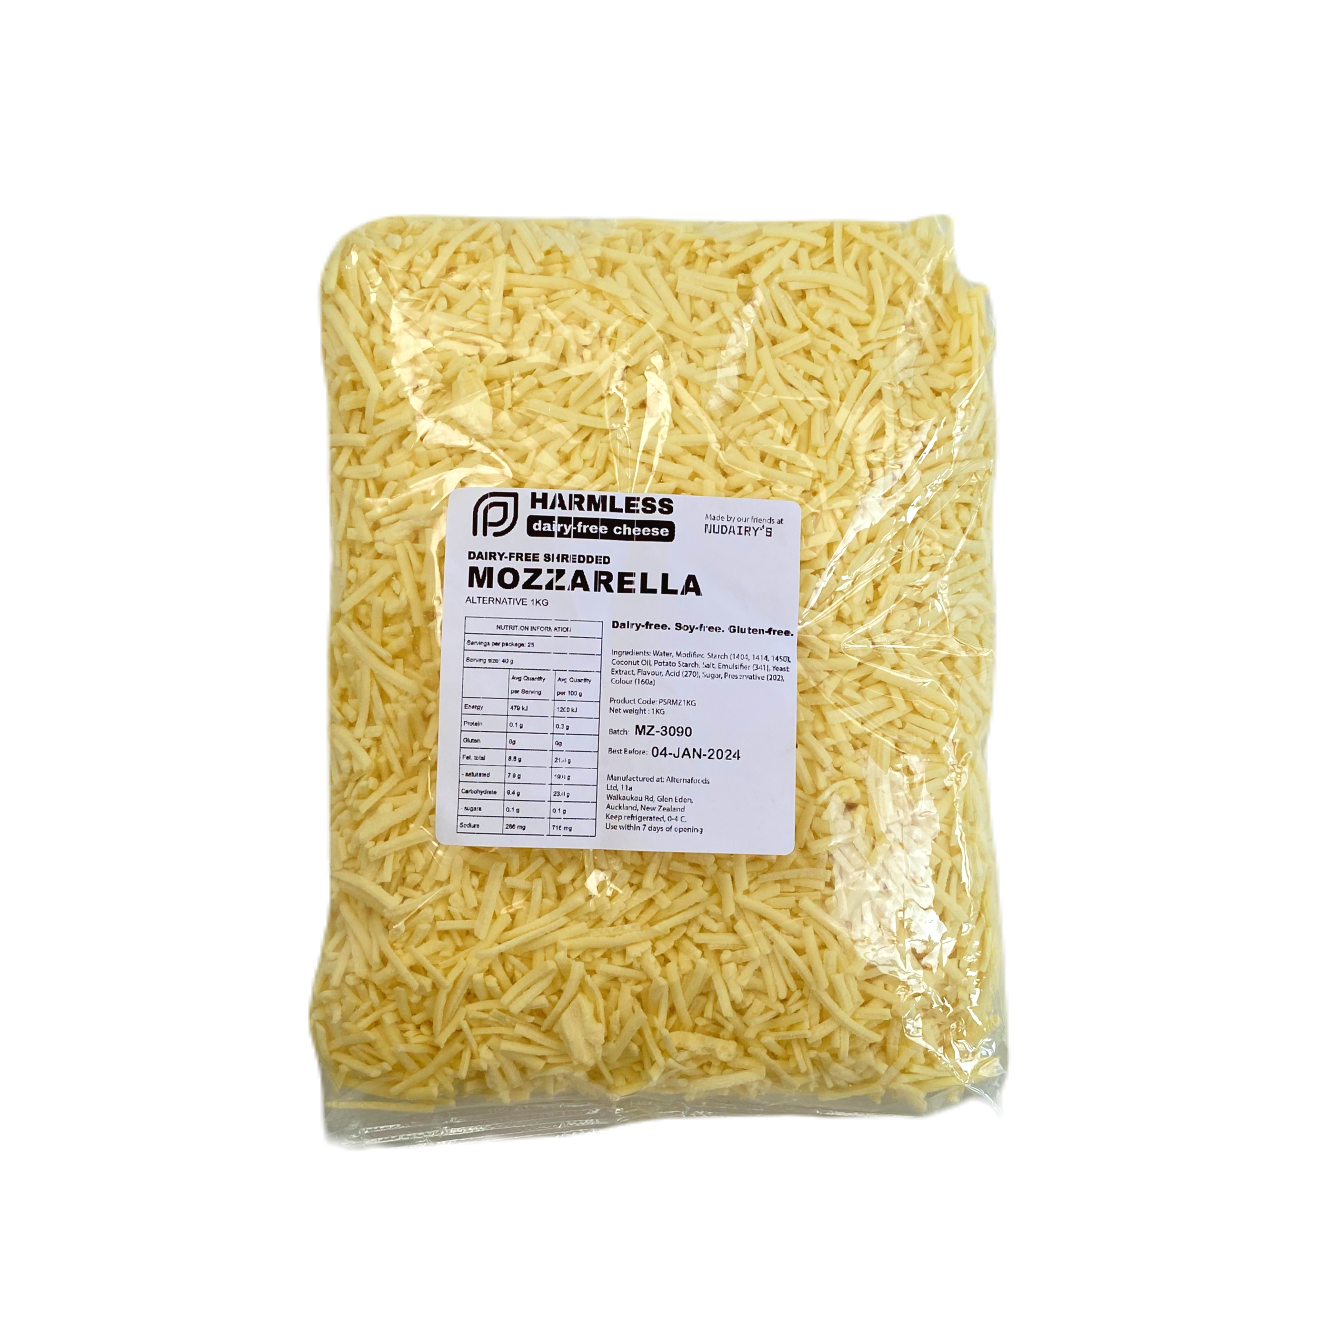 Harmless Dairy-Free Mozzarella Shredded 1kg